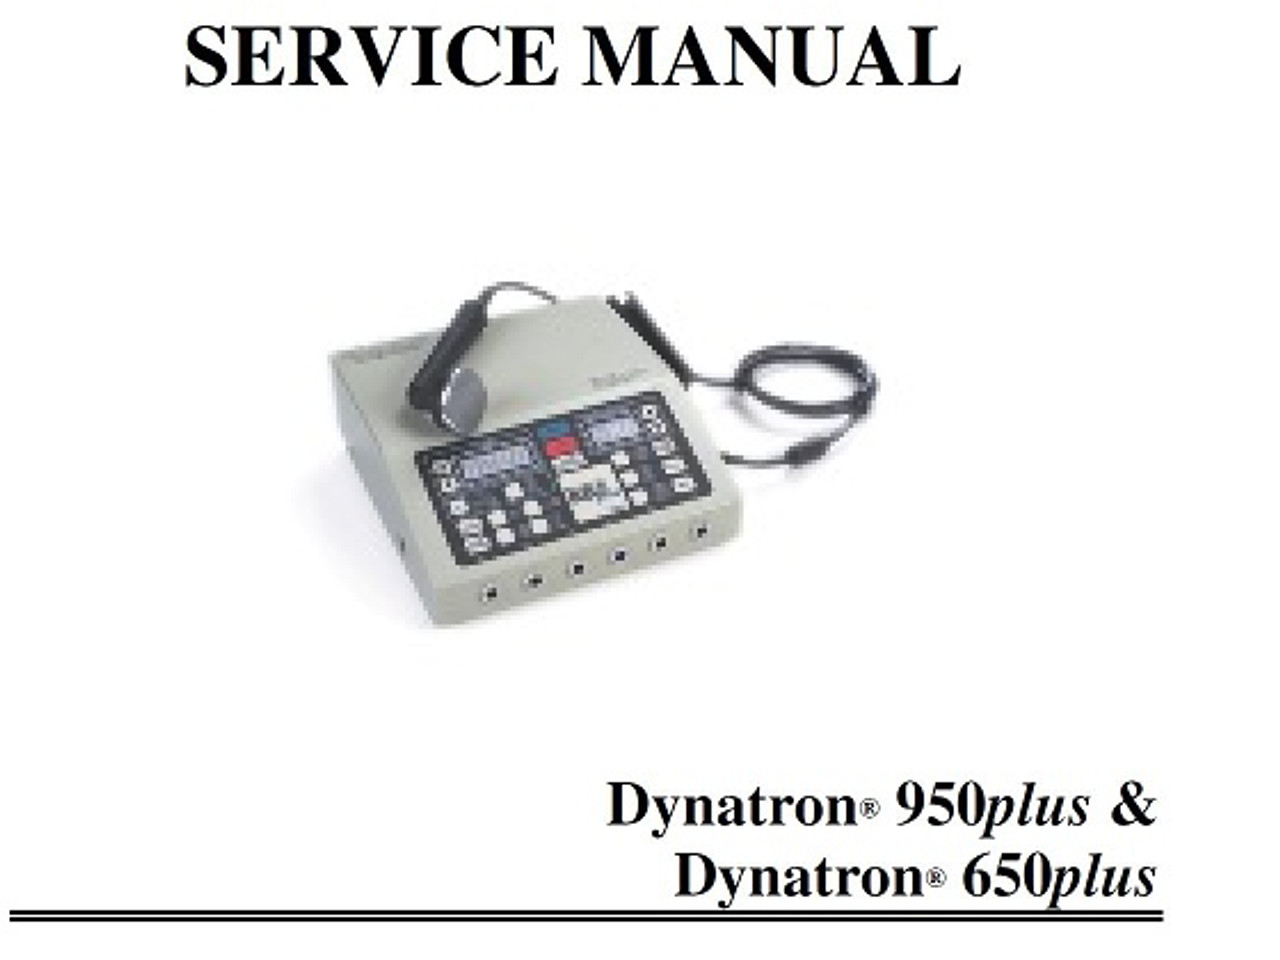 Dynatron 950 Plus Service Manual with Schematics - PDF Download